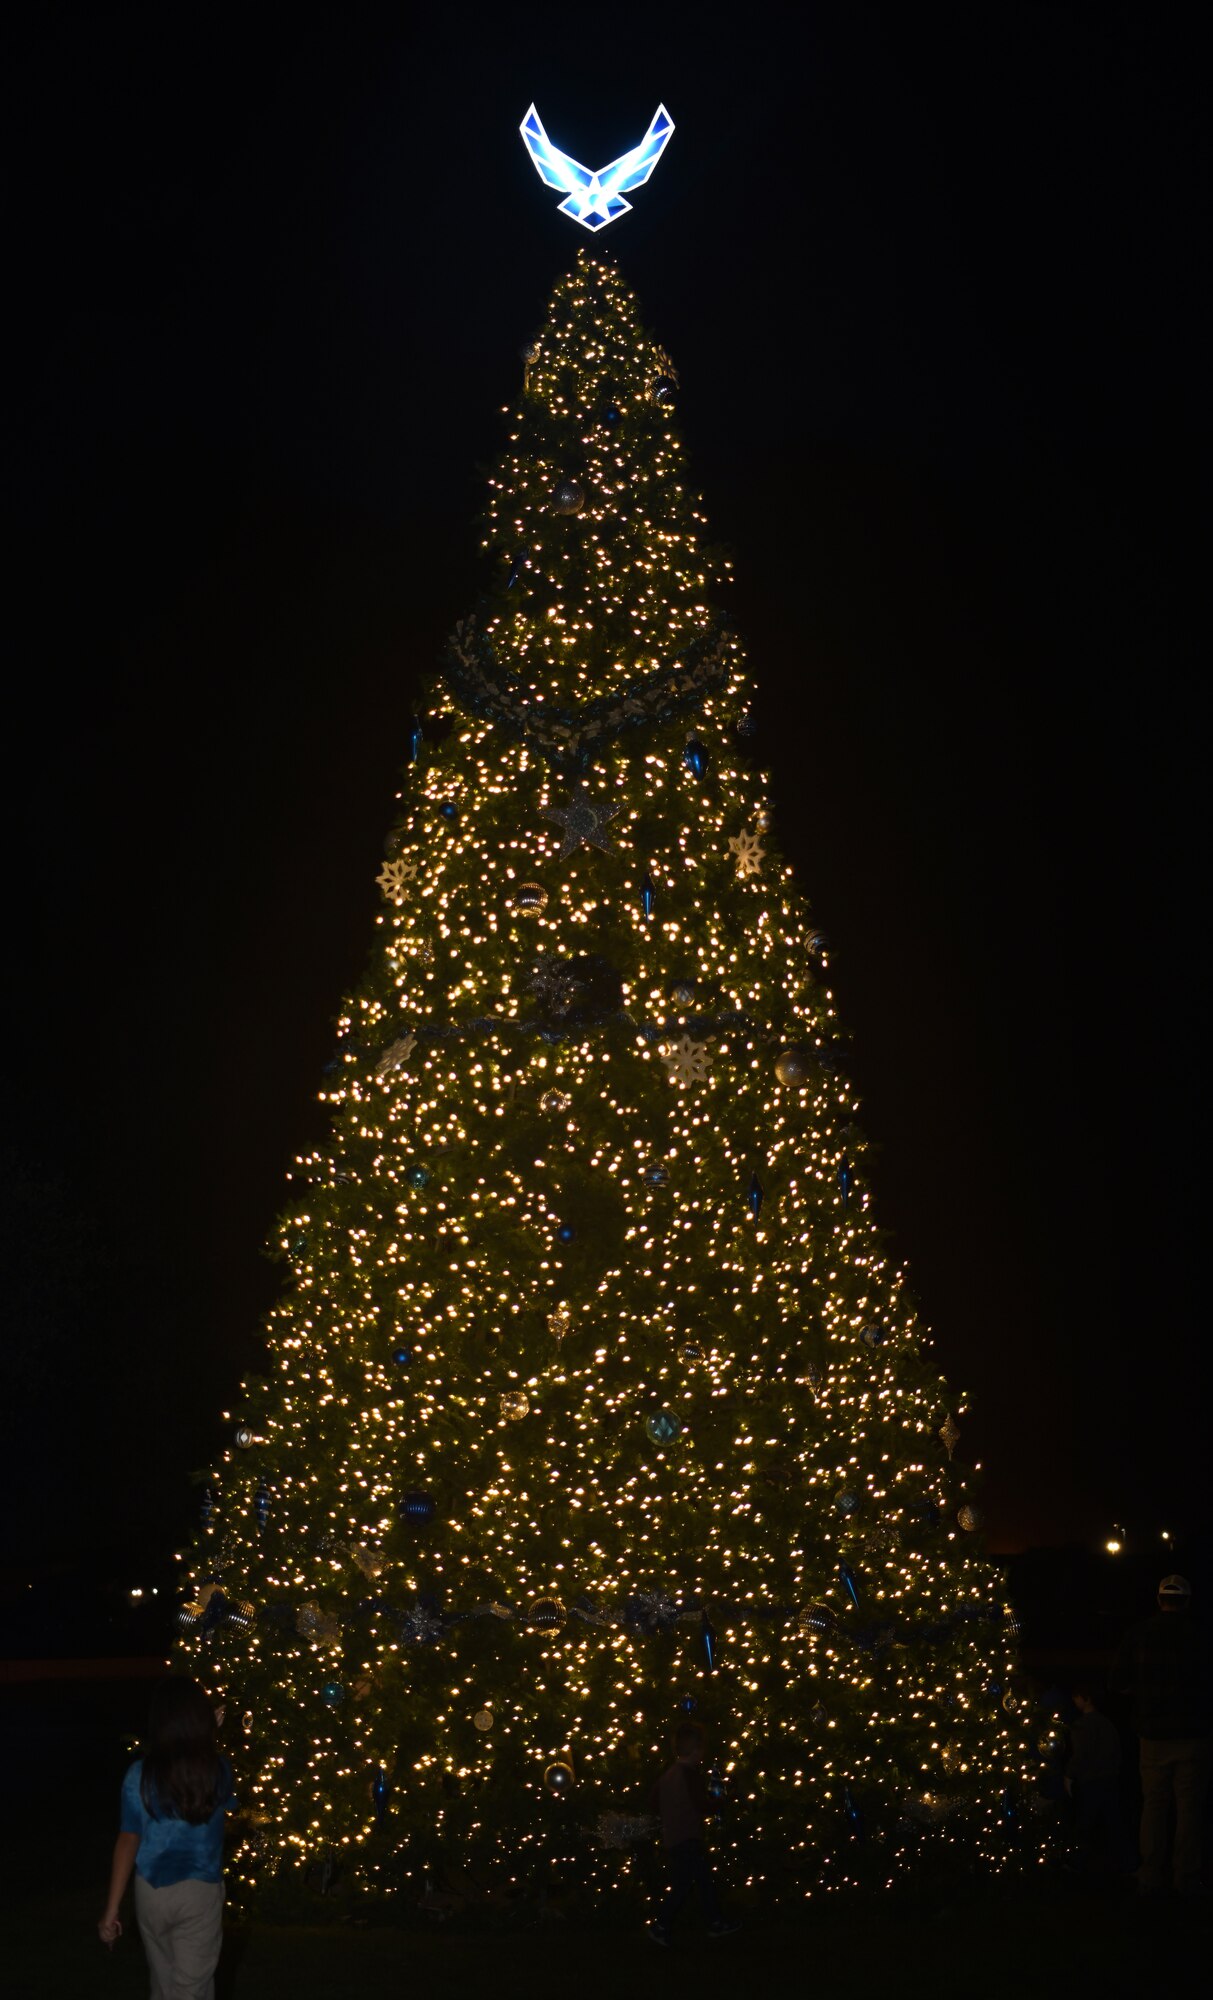 JBSA-Lackland holiday tree lighting